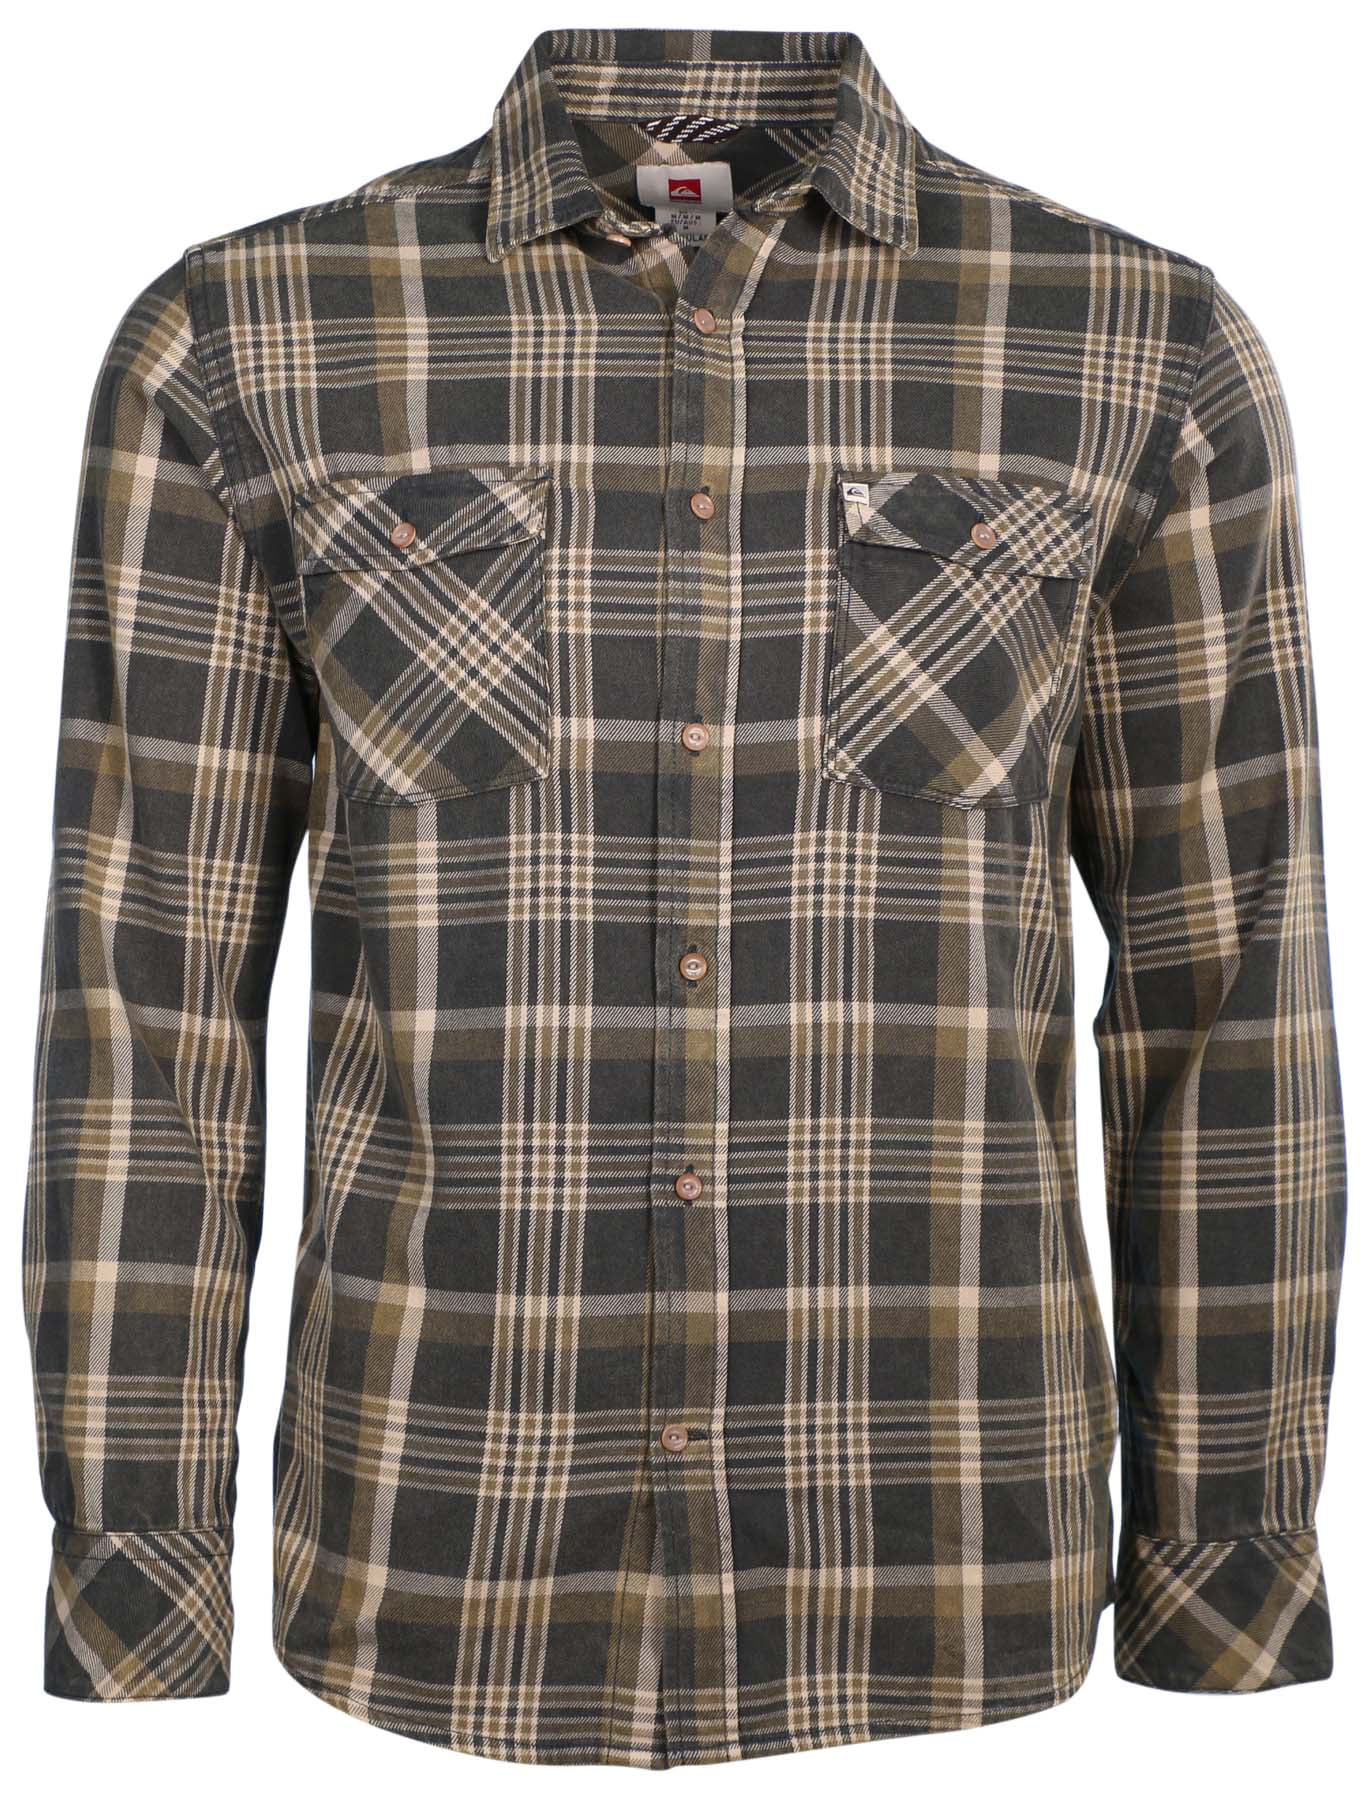 Men's Tang Plaid Flannel Shirt - Walmart.com